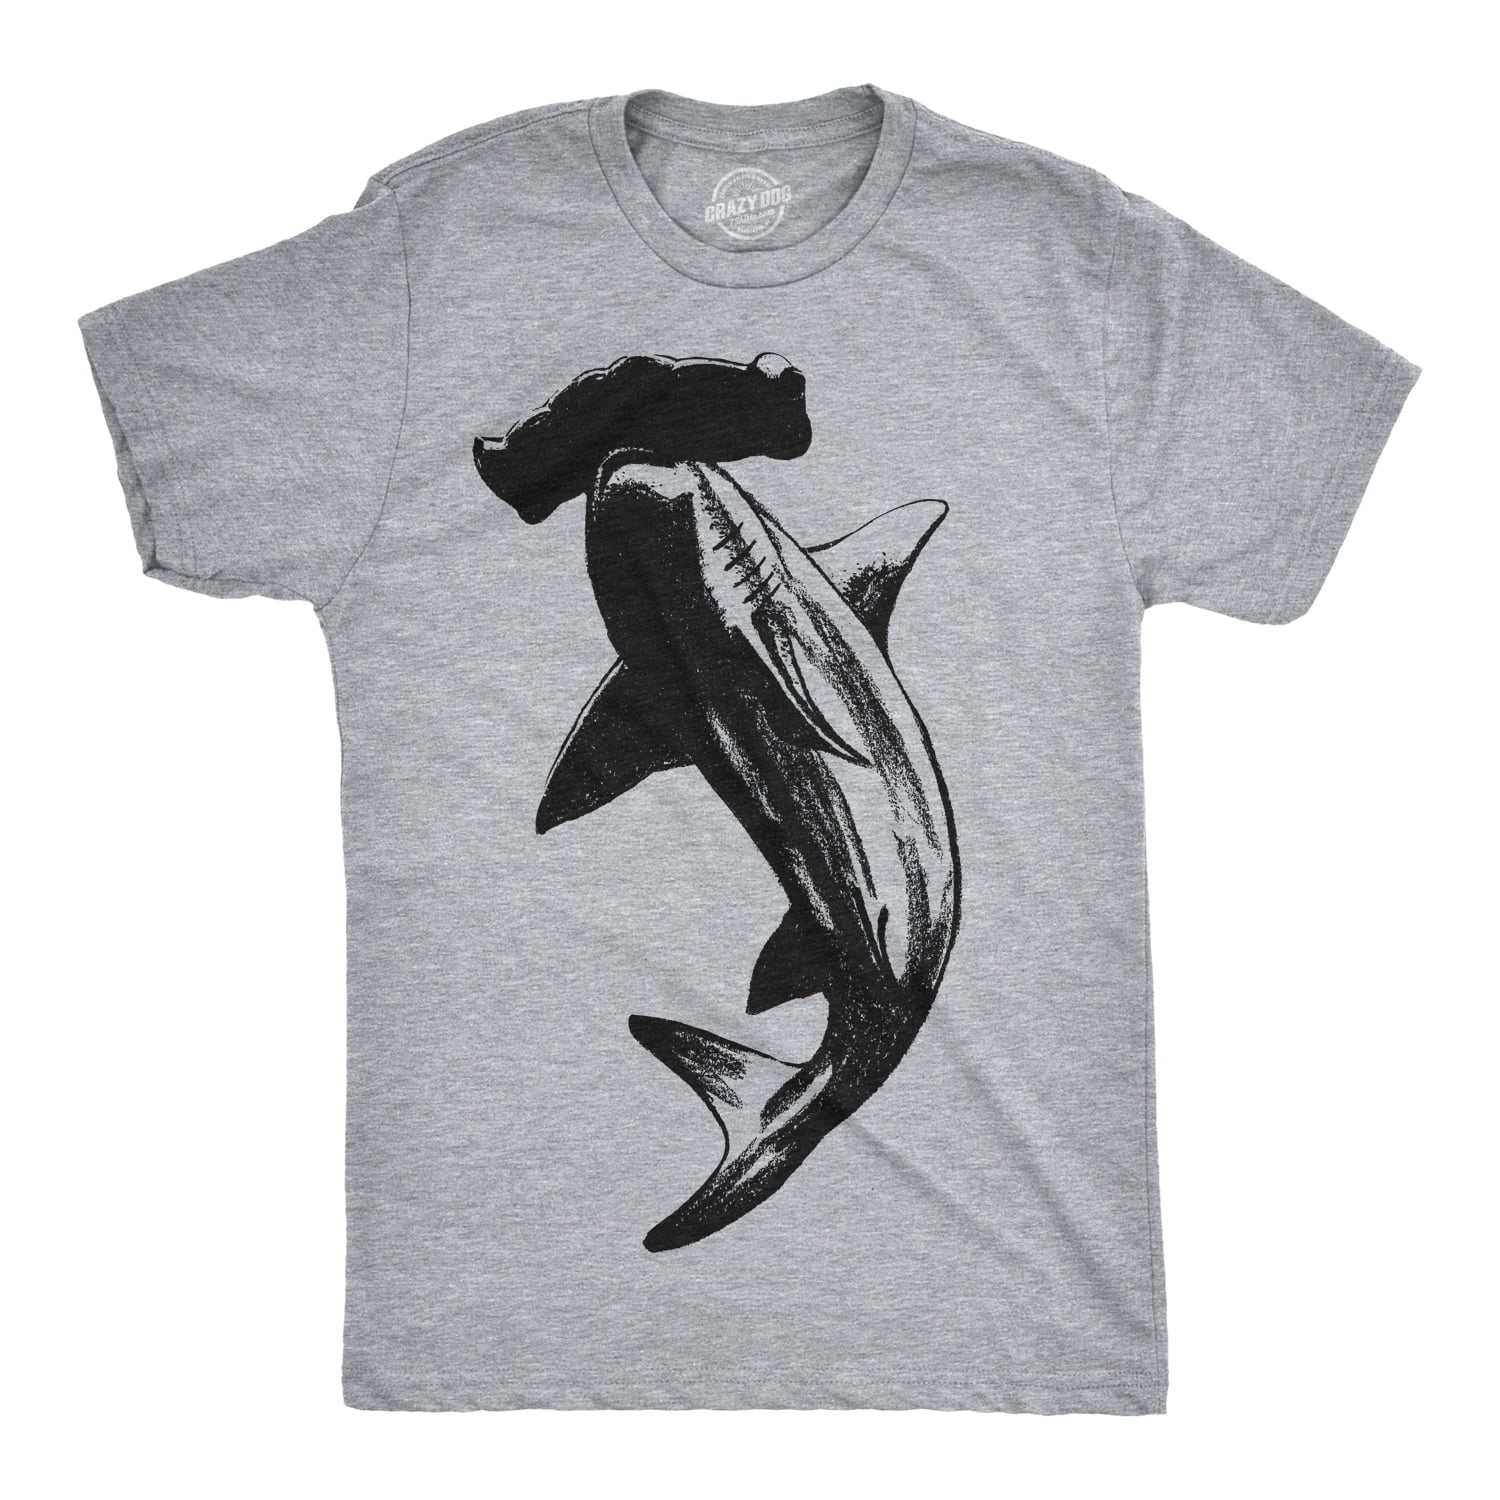 Sharks Kill You Scuba Diving Tops T-Shirt Funny Novelty Womens tee TShirt 